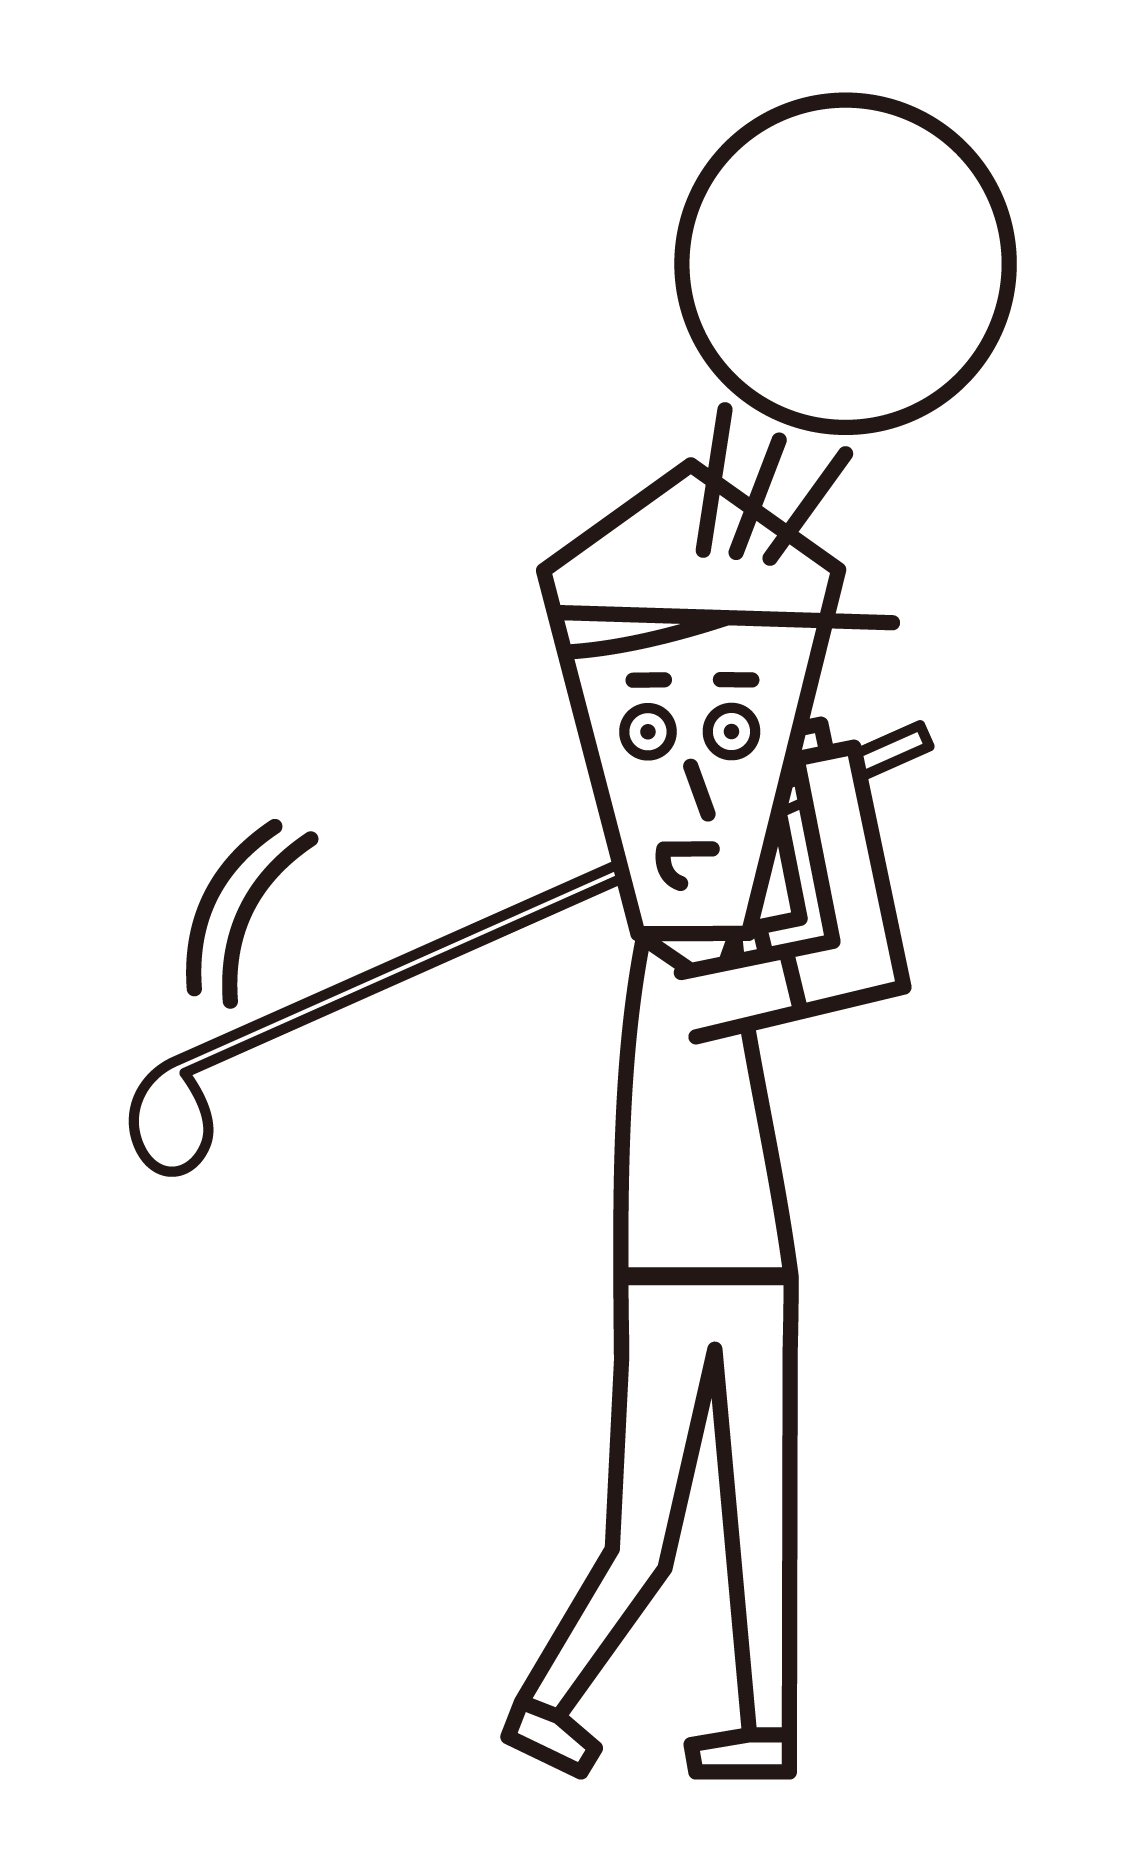 Illustration of a man swinging in golf